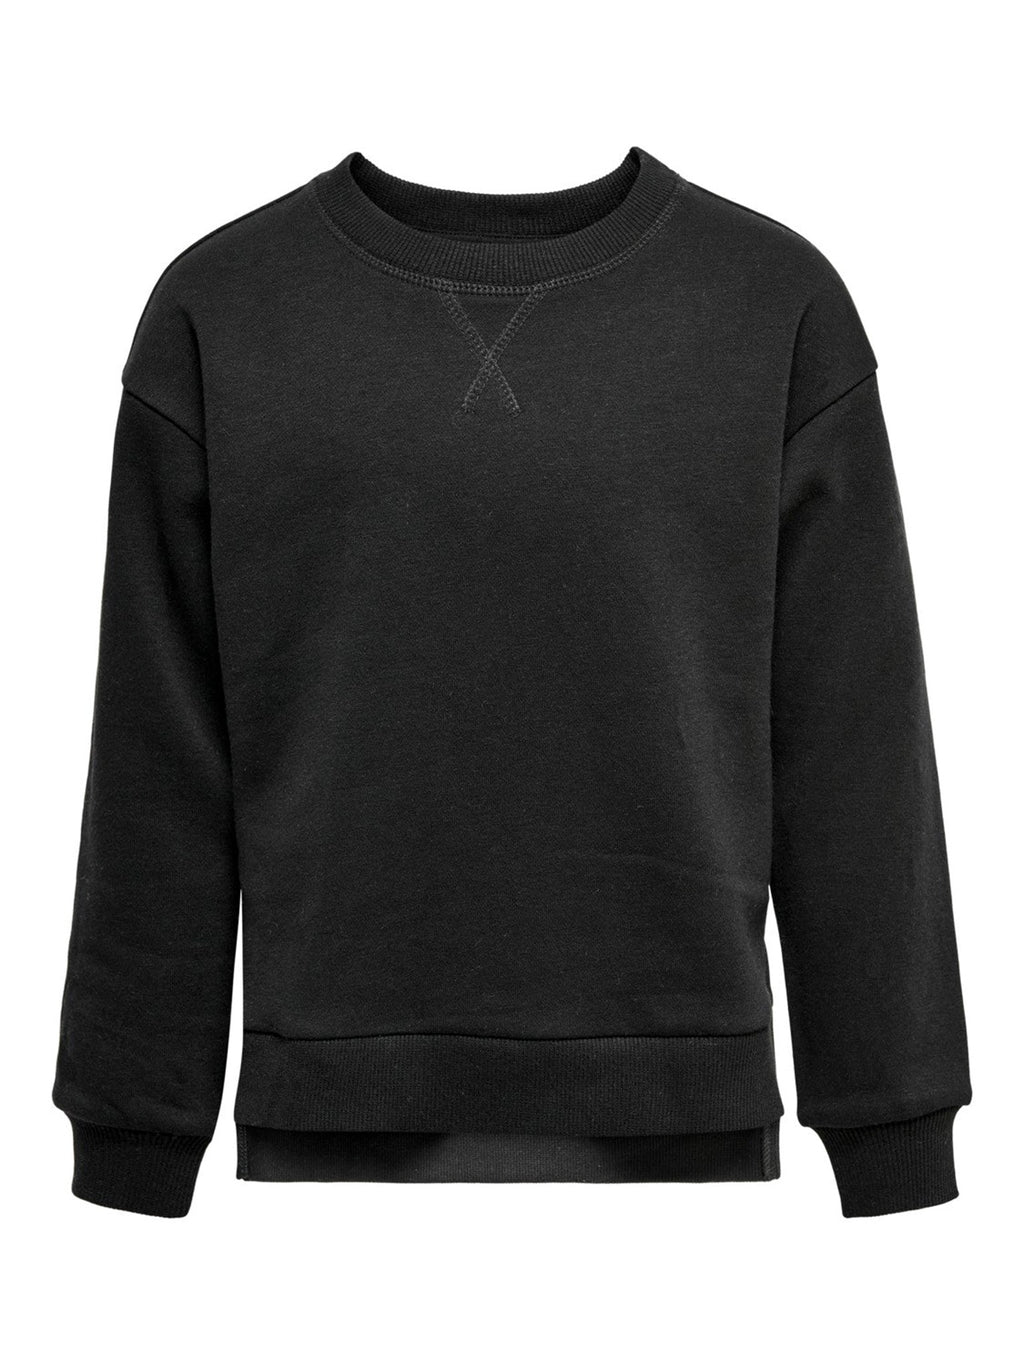 Every Life O-Neck Sweatshirt - Black